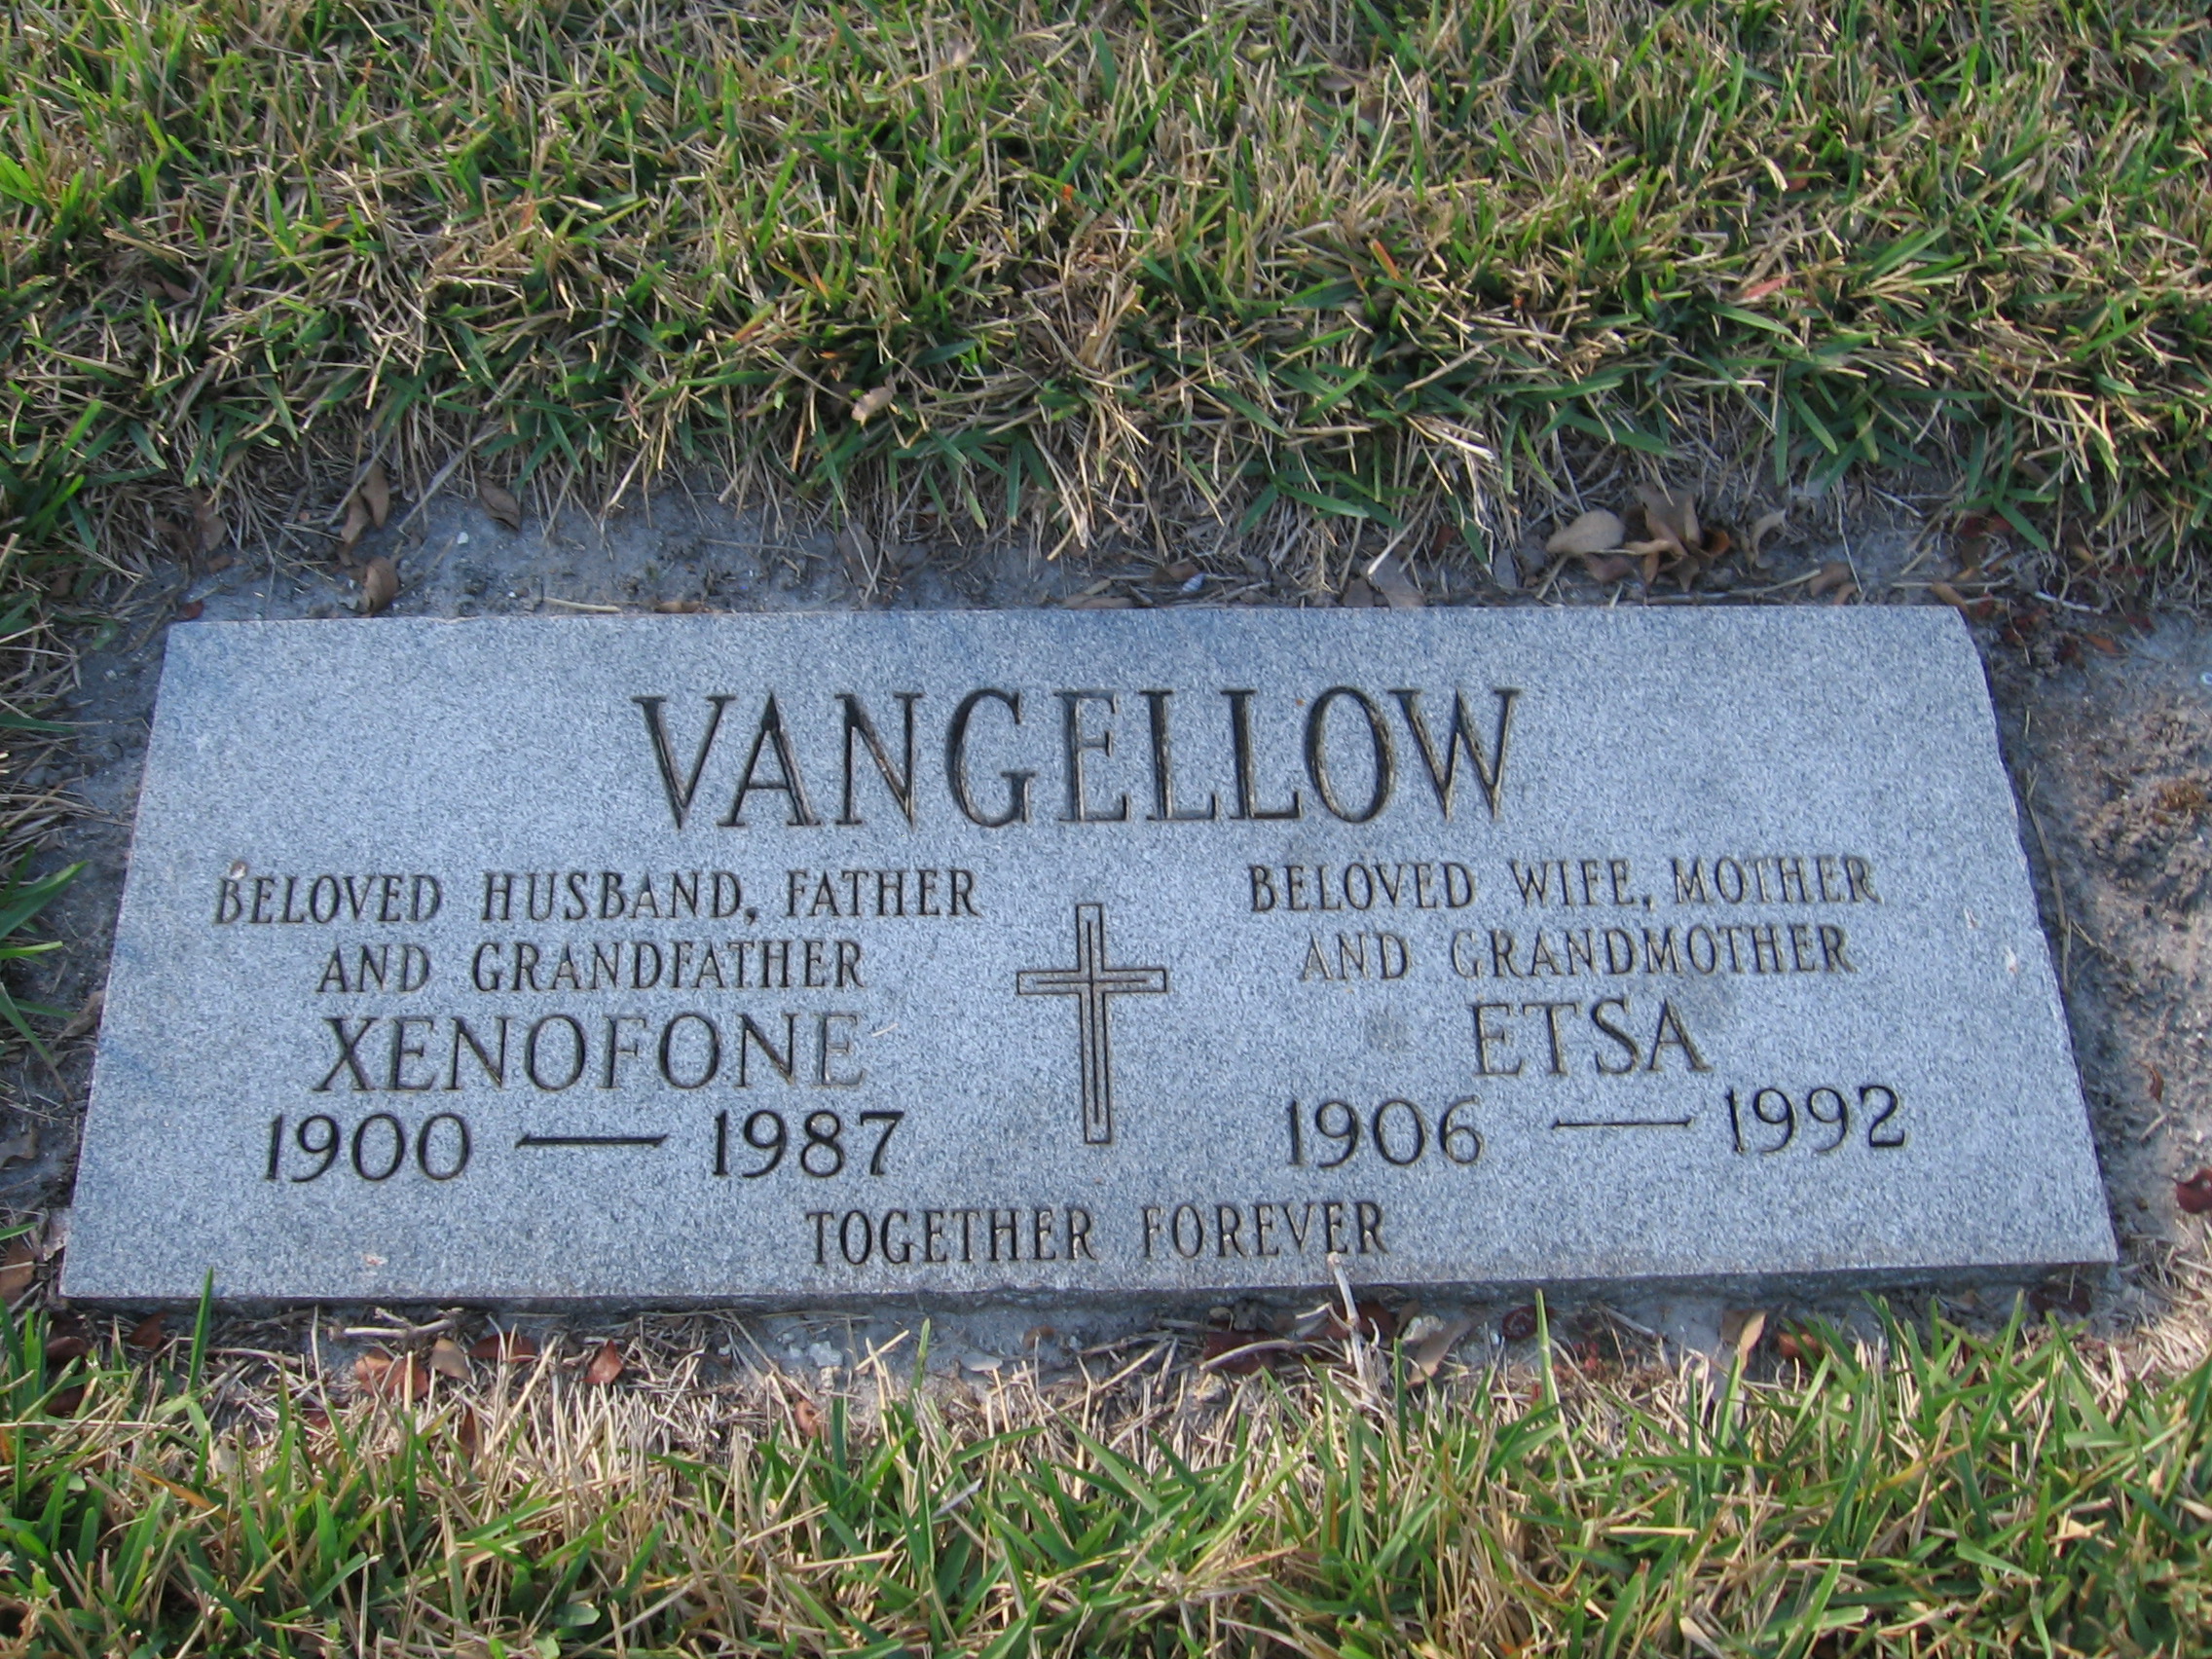 Xenofone Vangellow